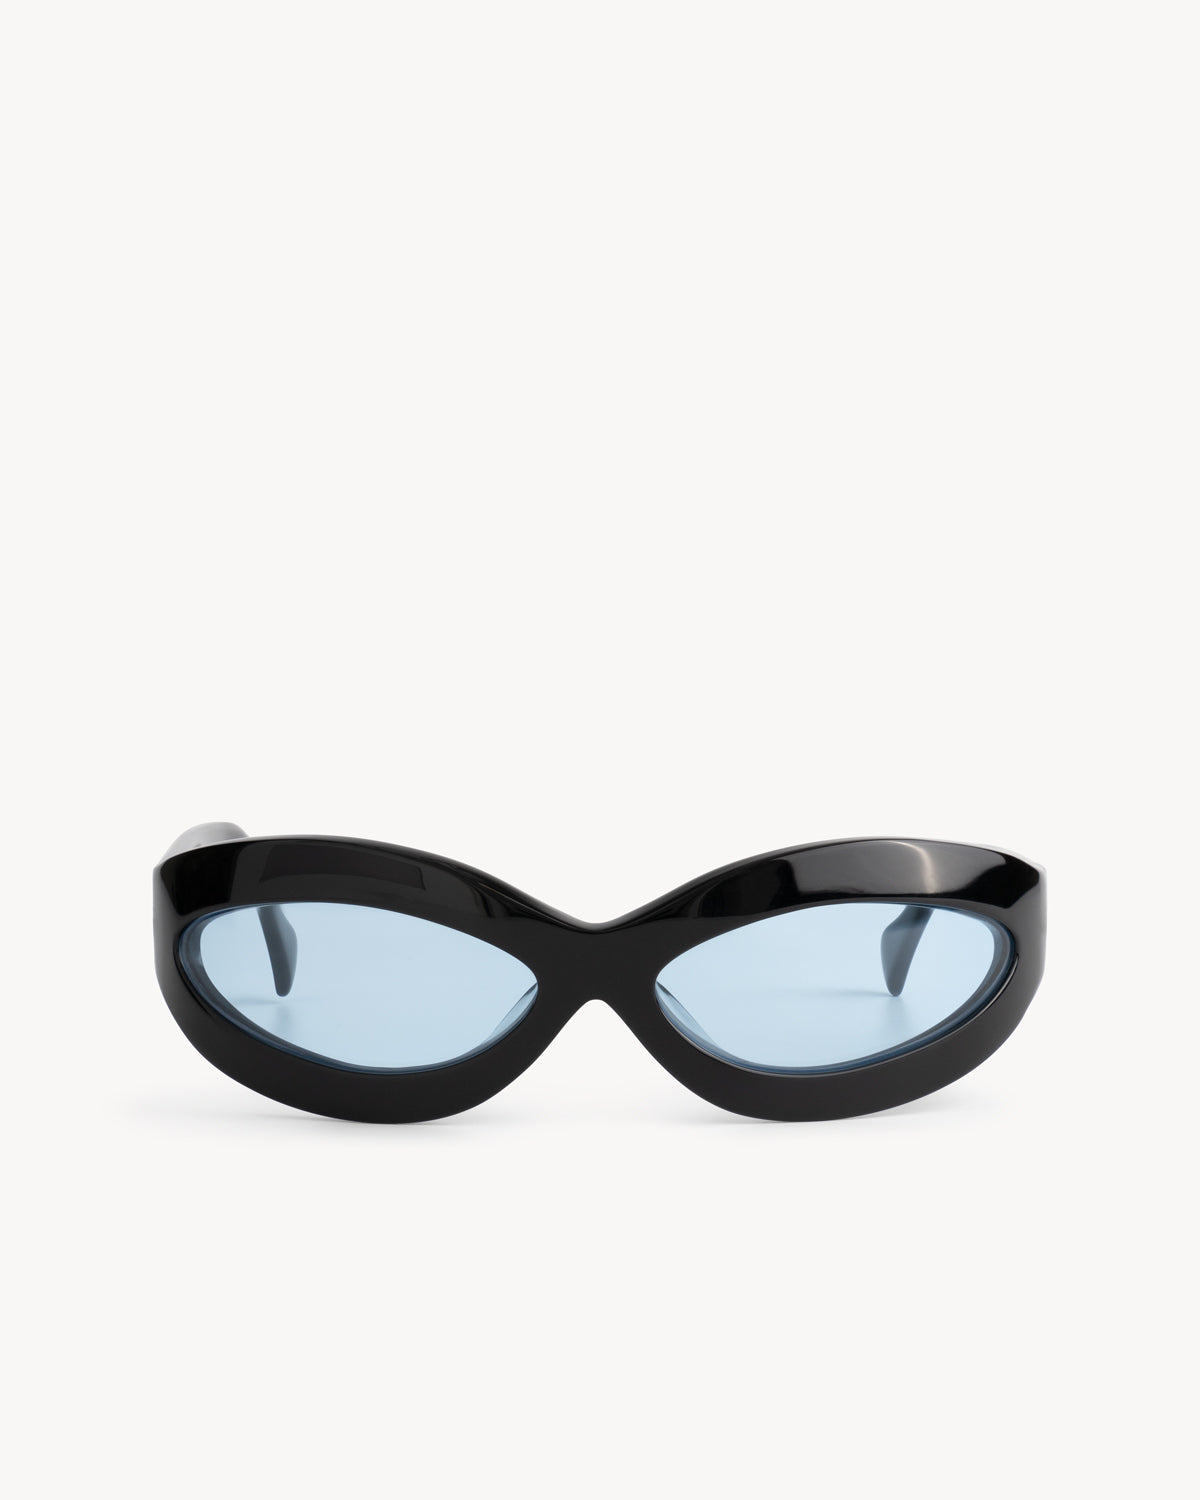 Port Tanger Summa Sunglasses in Black Acetate and Rif Blue Lenses 1